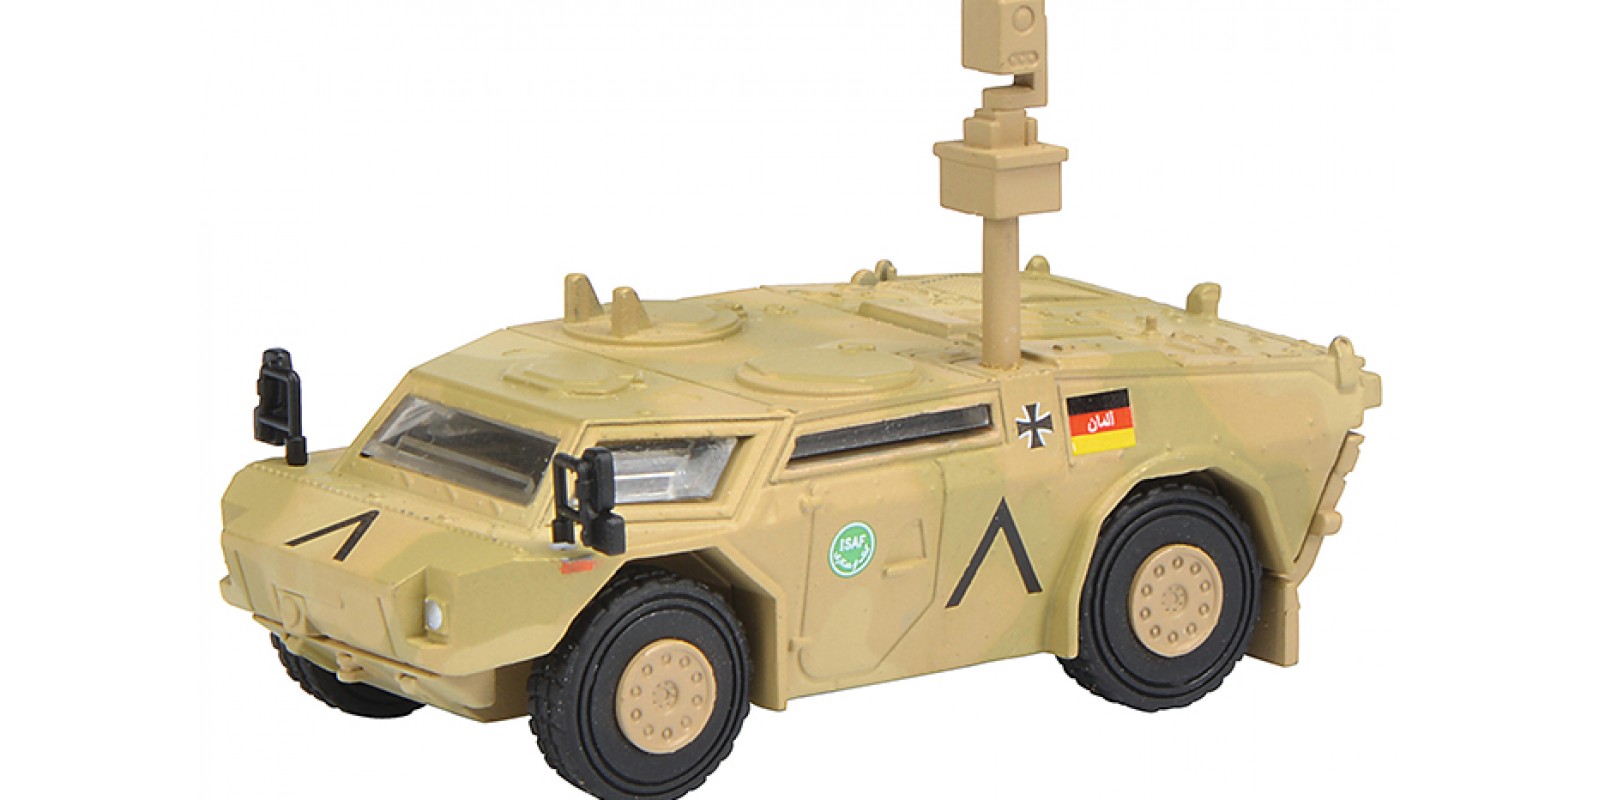 SC452624900 Fennek scouting vehicle camouflaged "ISAF"